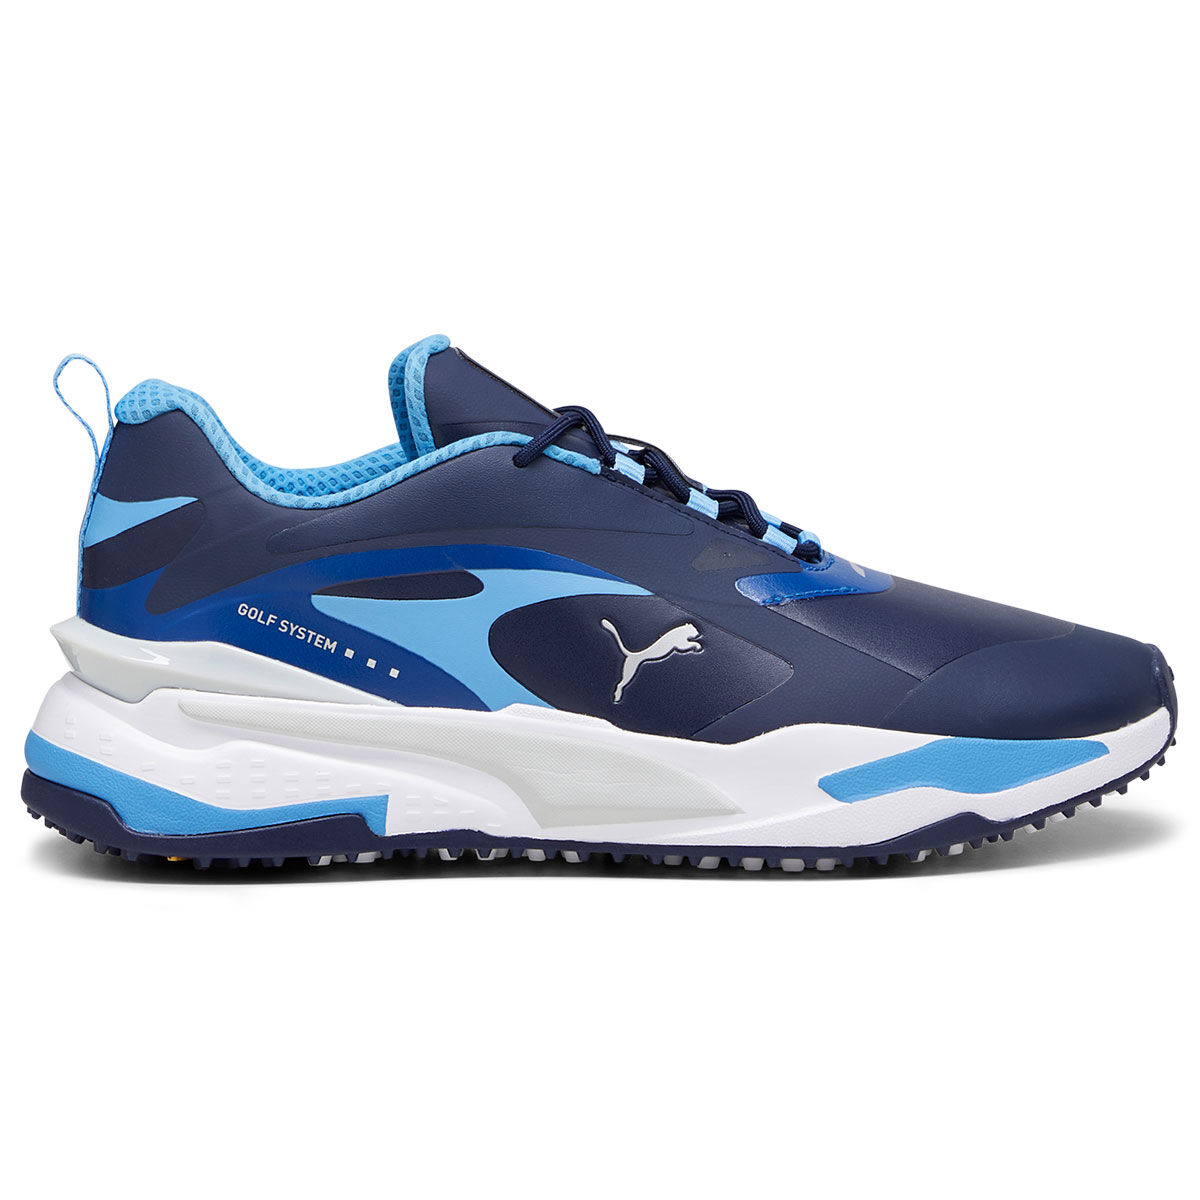 PUMA Men’s GS-Fast Waterproof Spikeless Golf Shoes, Mens, Navy/regal blue/white, 11 | American Golf